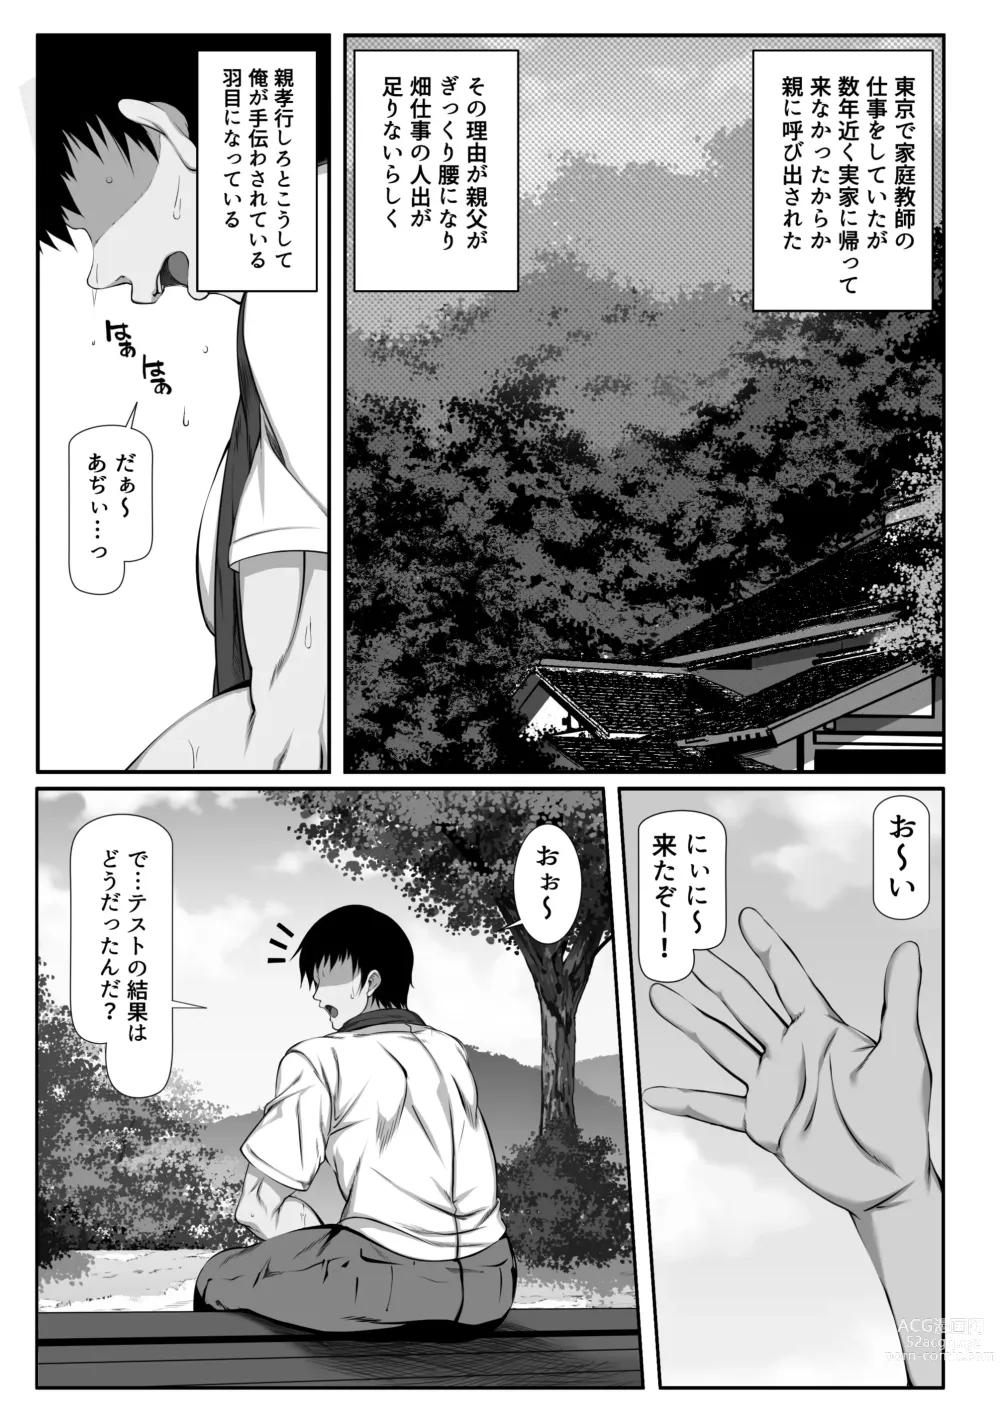 Page 2 of doujinshi Muchi Najimi